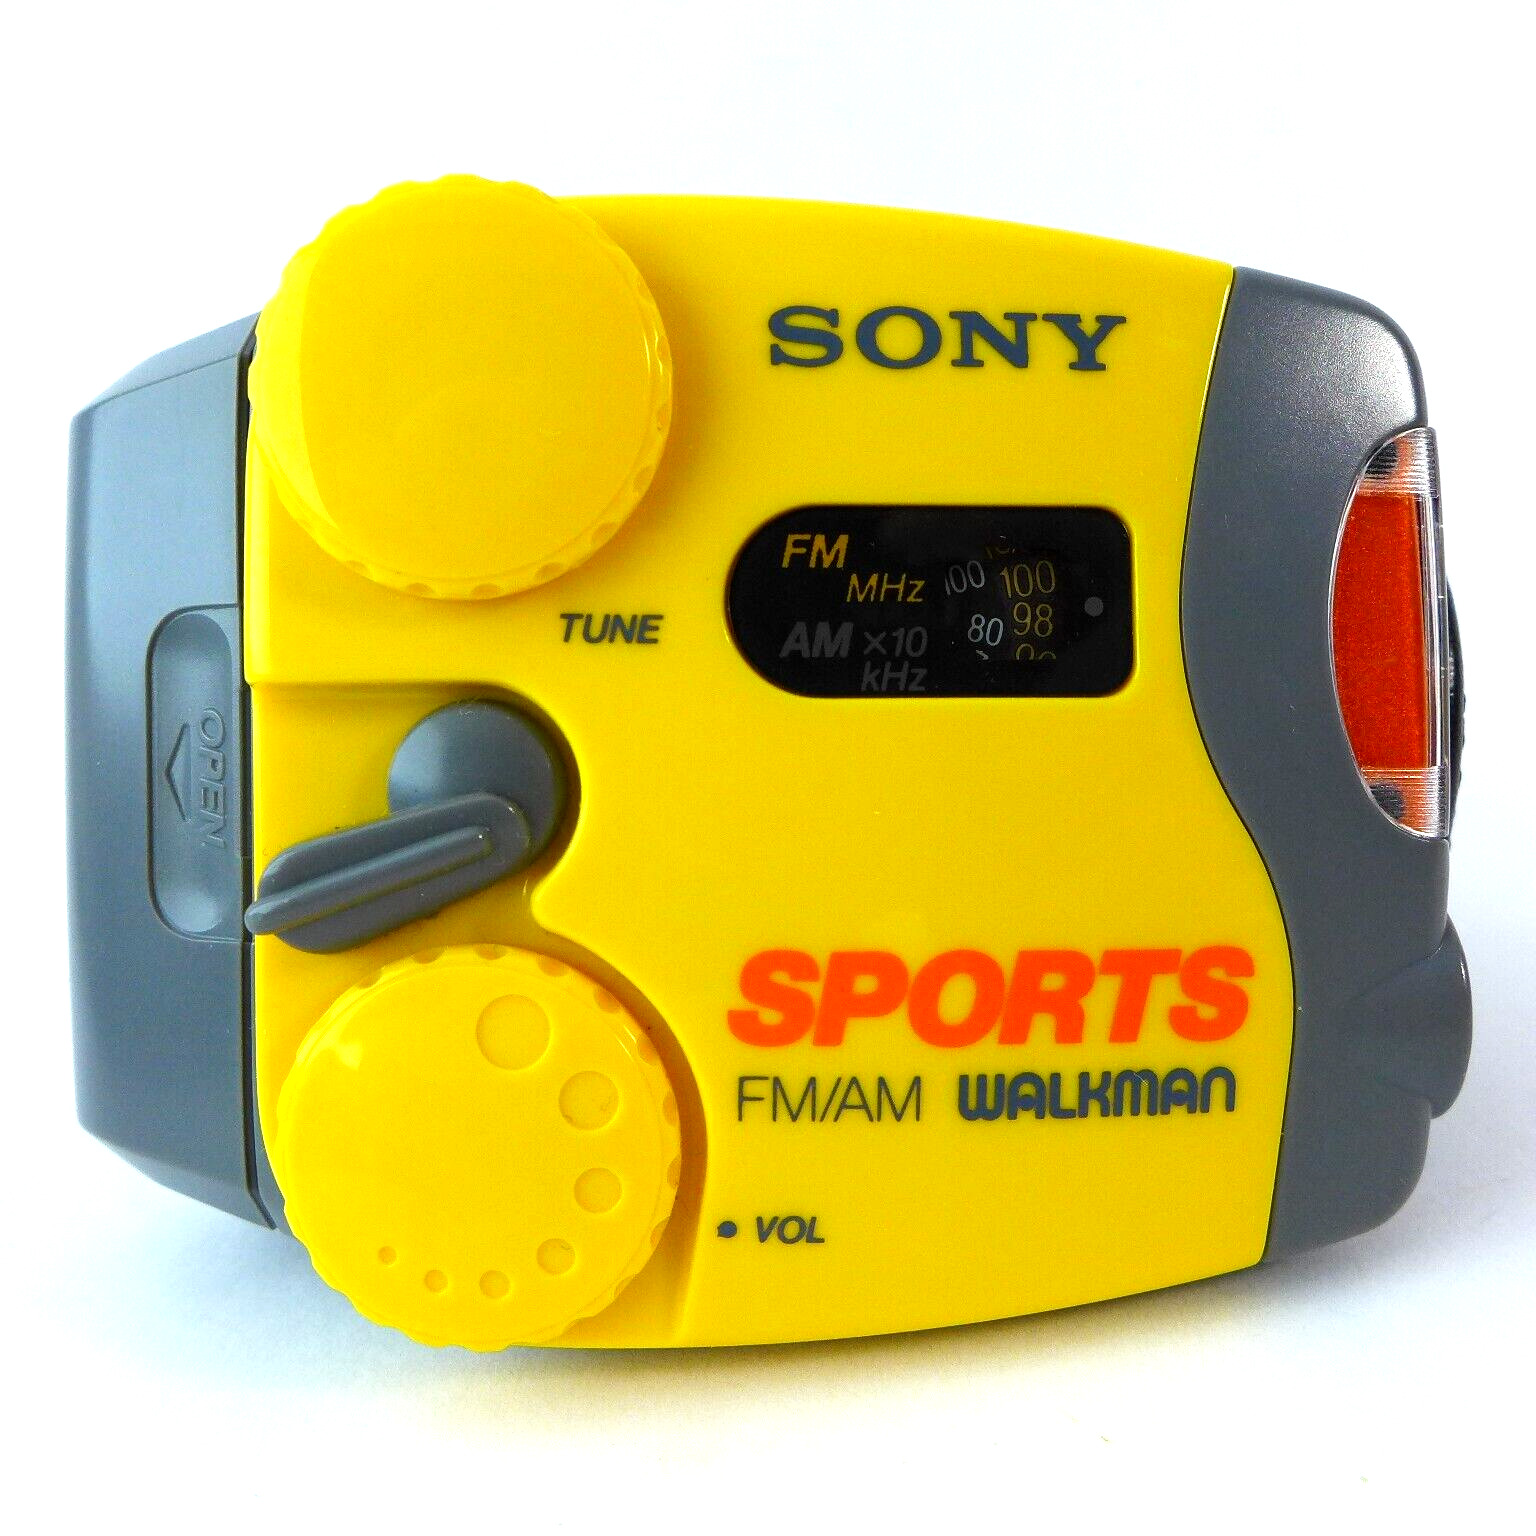 Sony SRF-88 FM/AM Yellow Sports Walkman Radio Running W/ Armband Tested Working